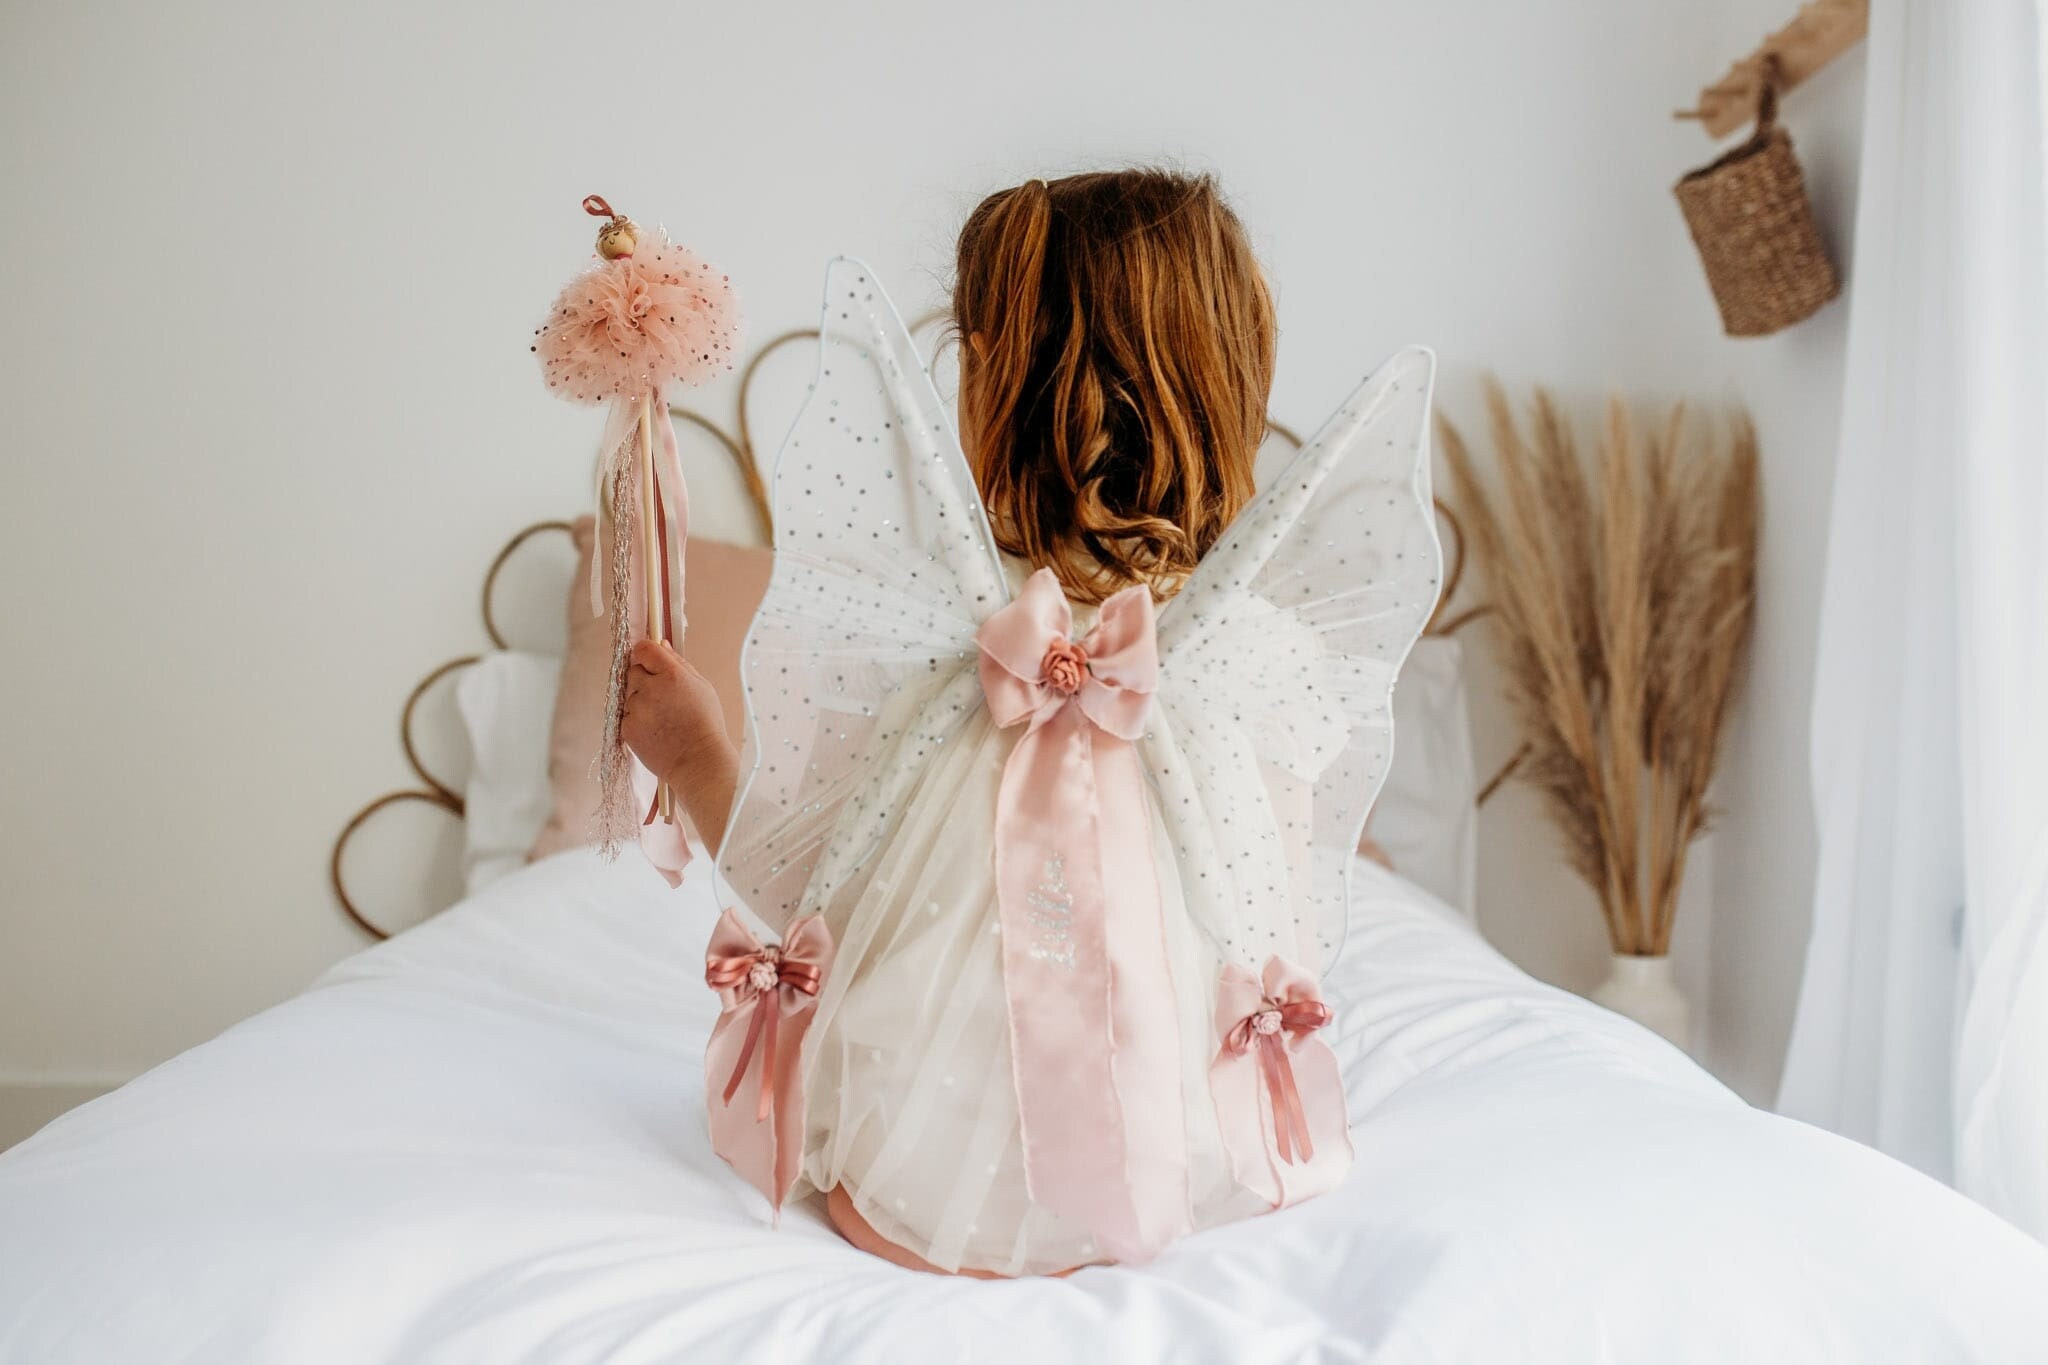 Fairy decor, fairy nursery decor, girls nursery decor, free standing fairy,  girls pink nursery decor, girls bedroom accessories, tutu wings